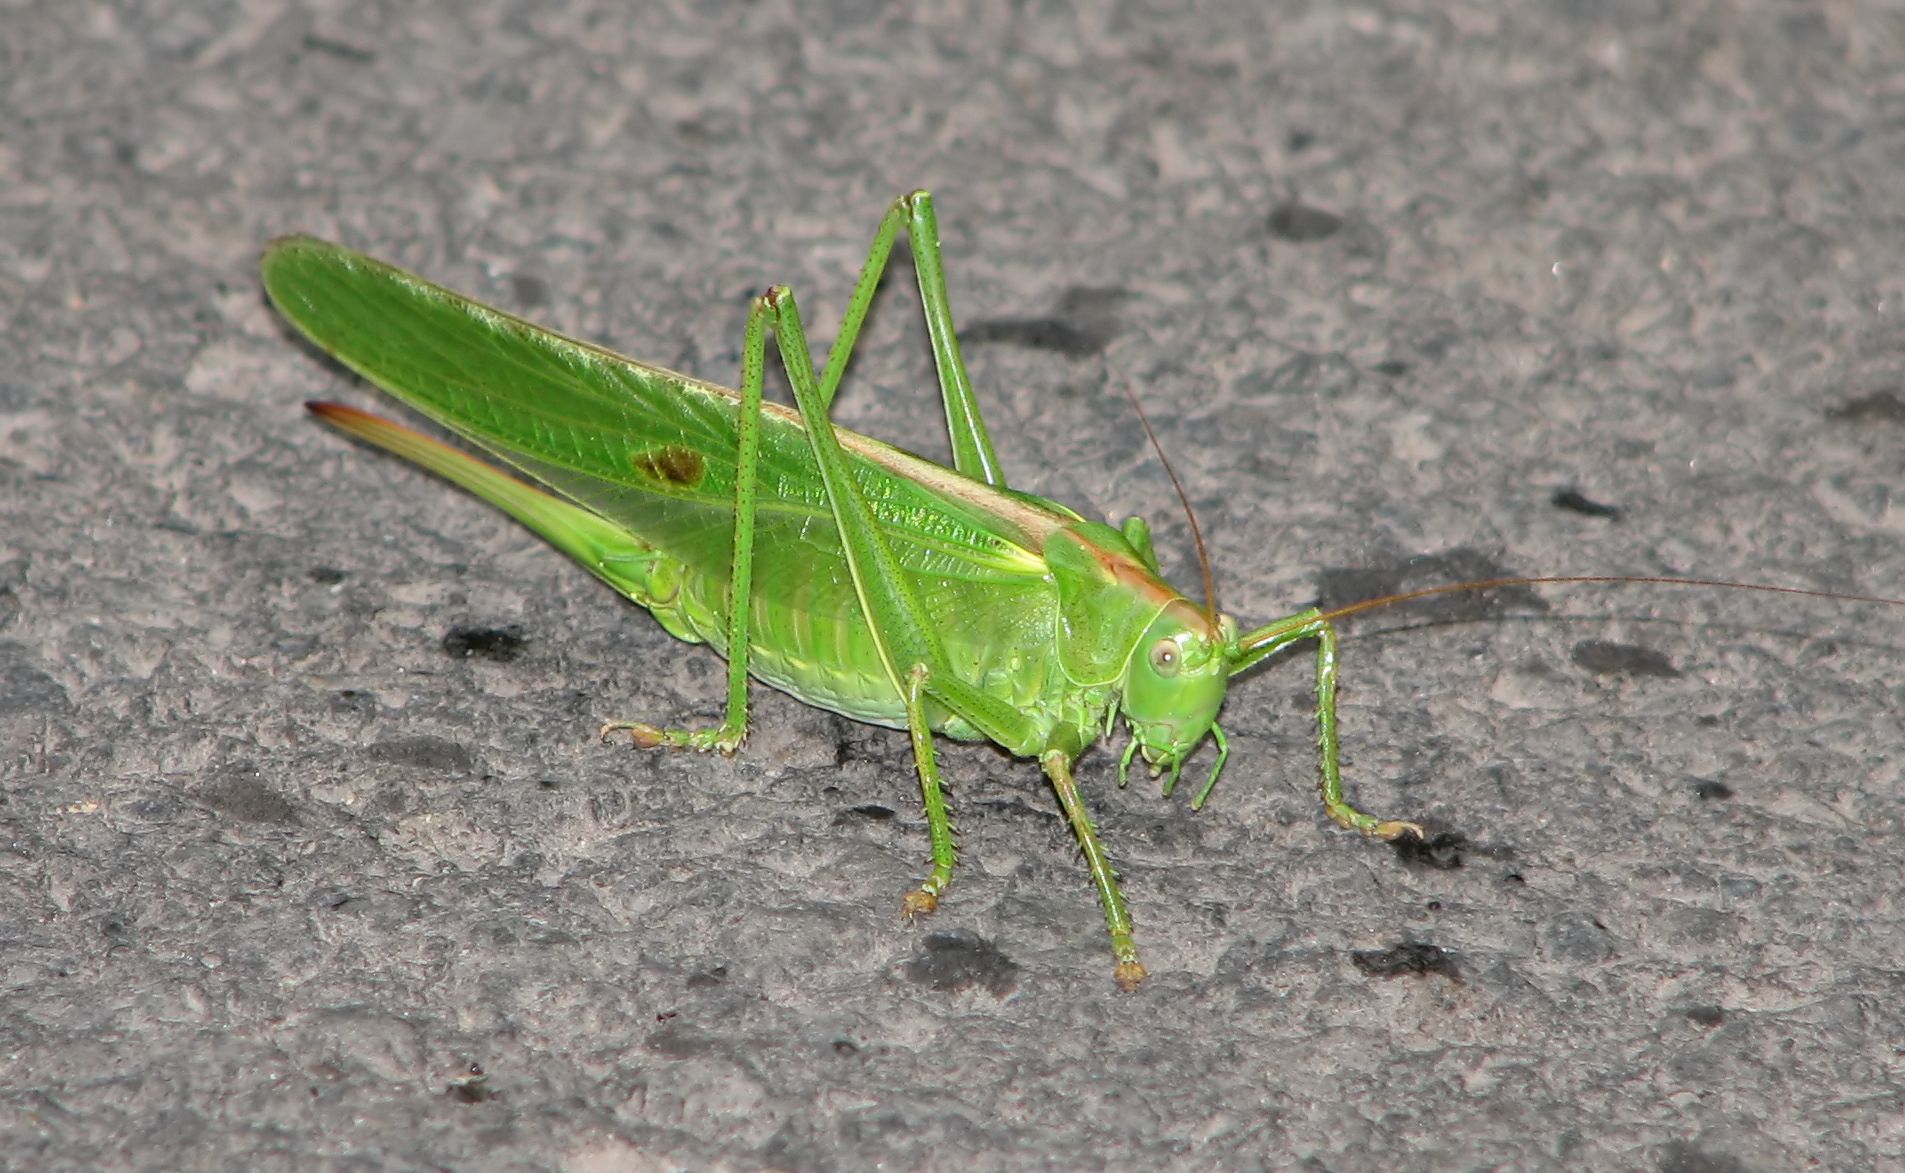 Green cricket photo